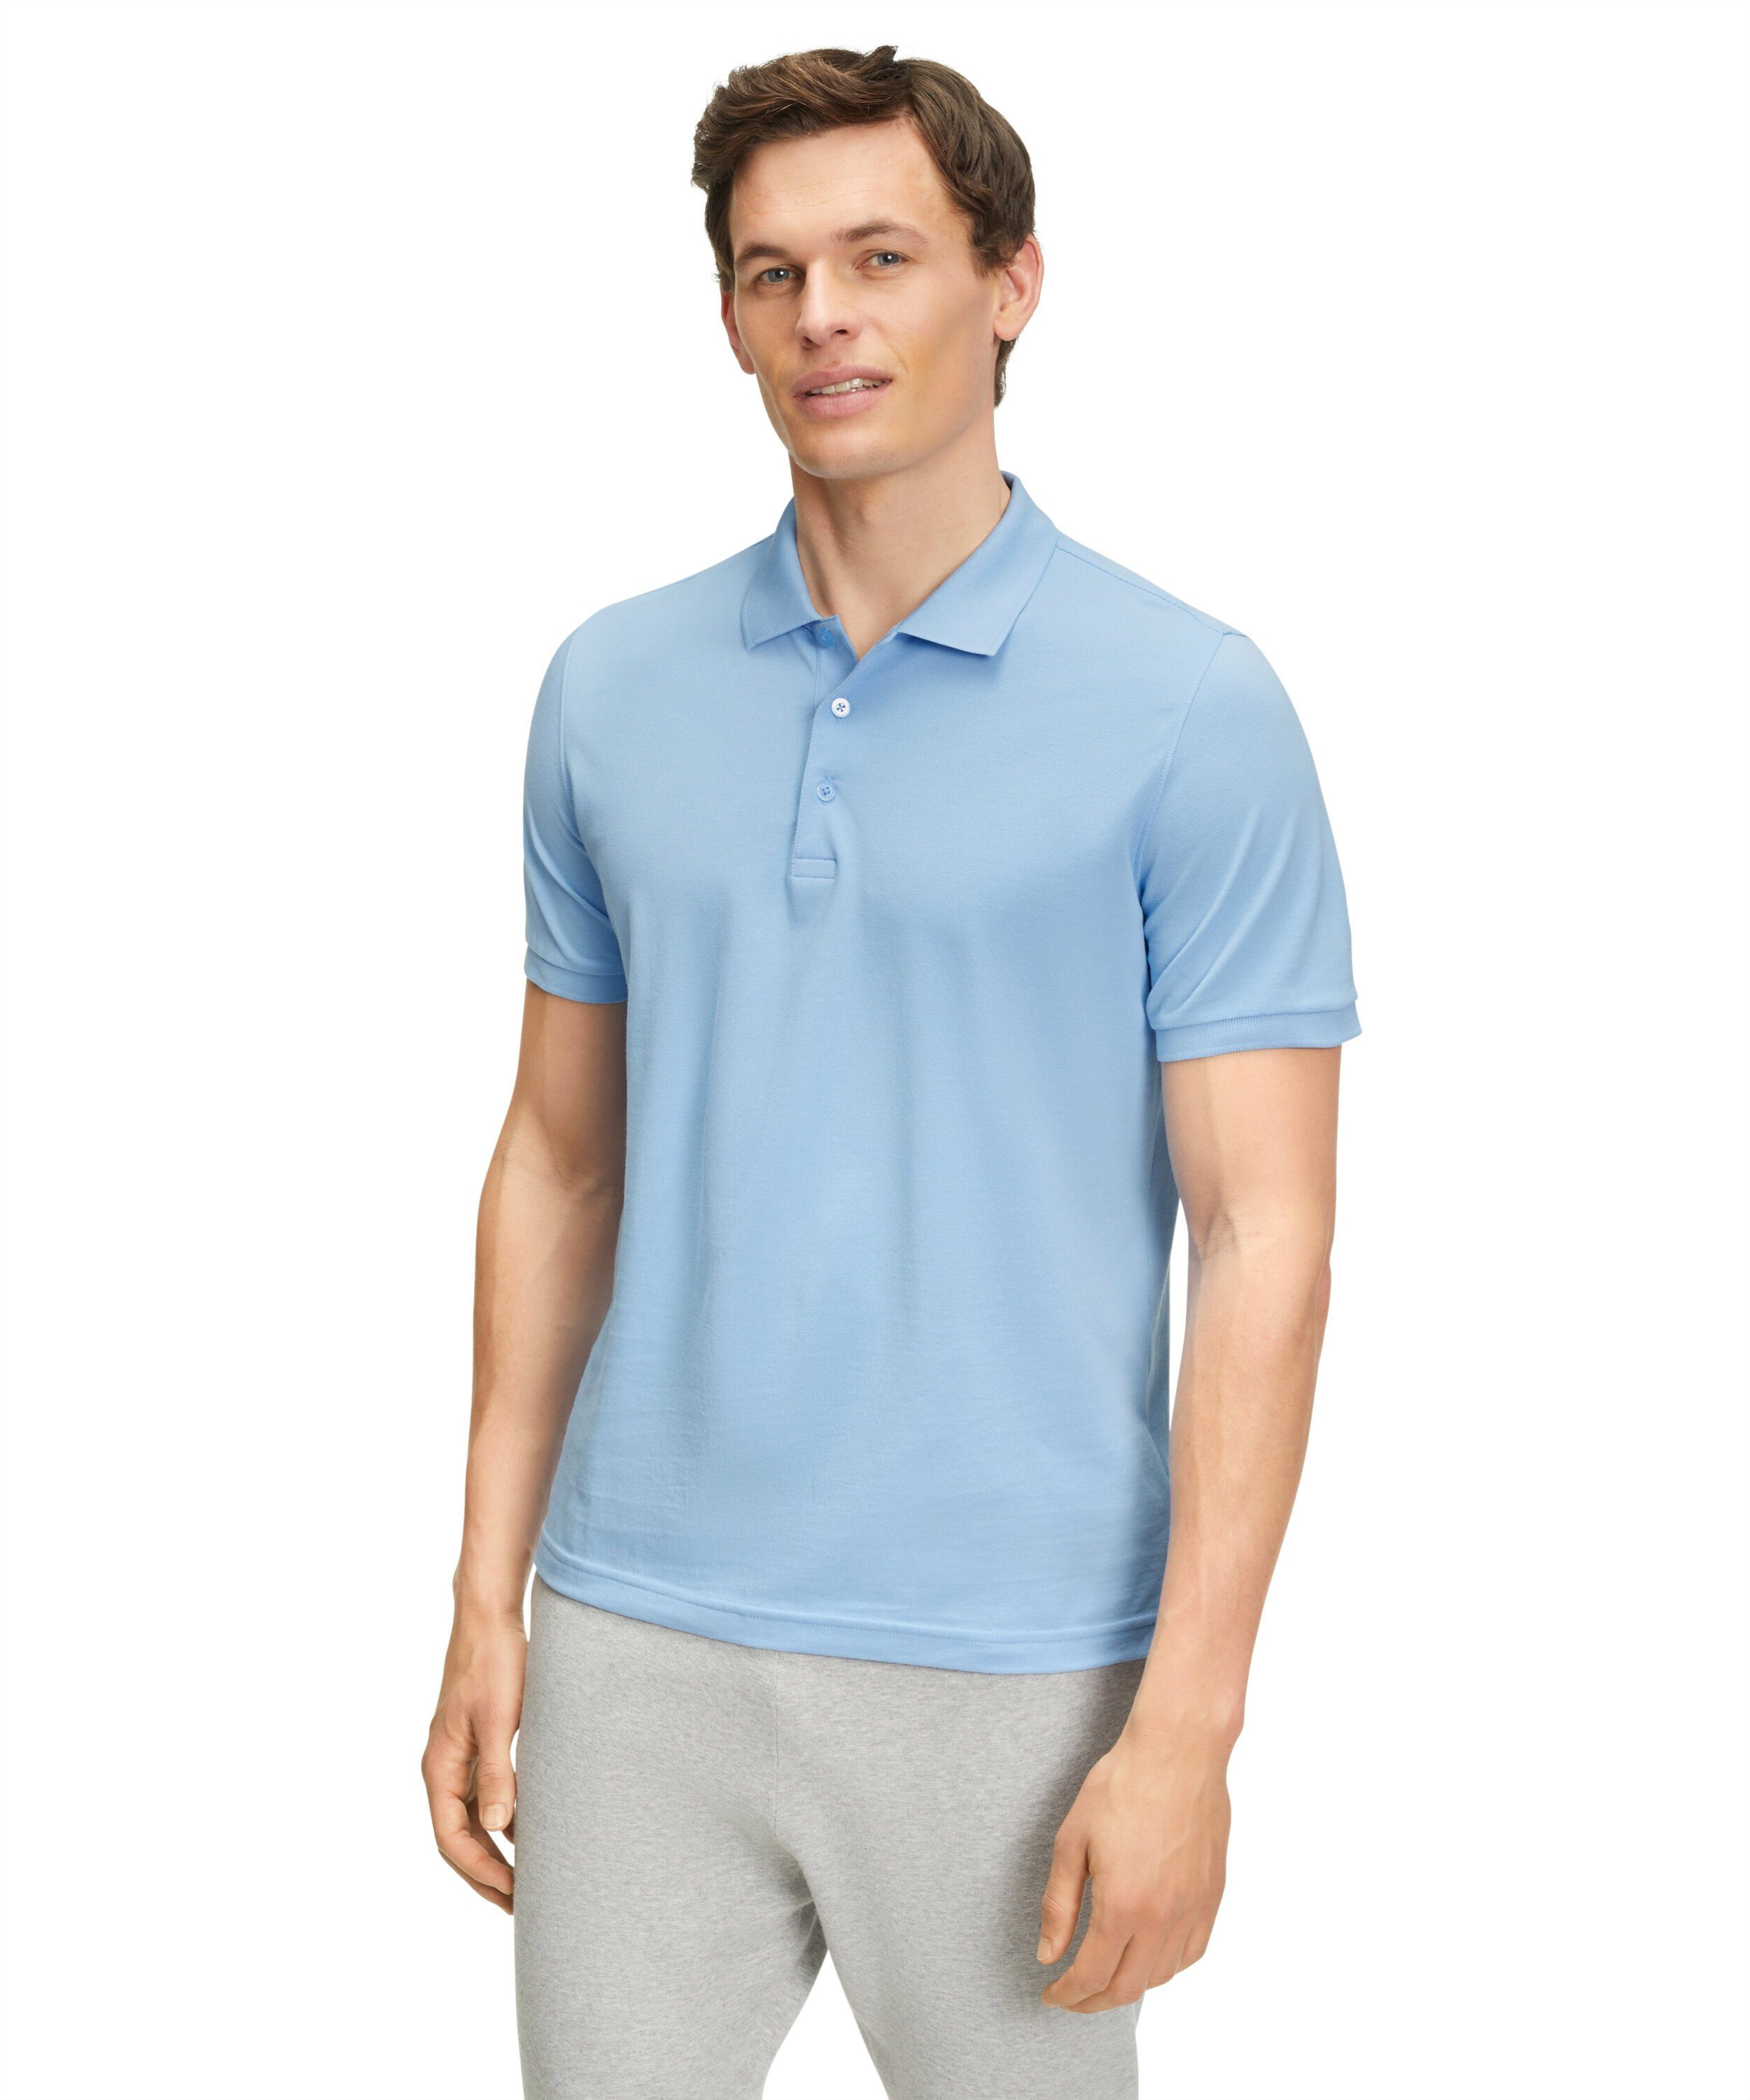 FALKE Poloshirt aus hochwertiger Pima-Baumwolle sky blue (6807)